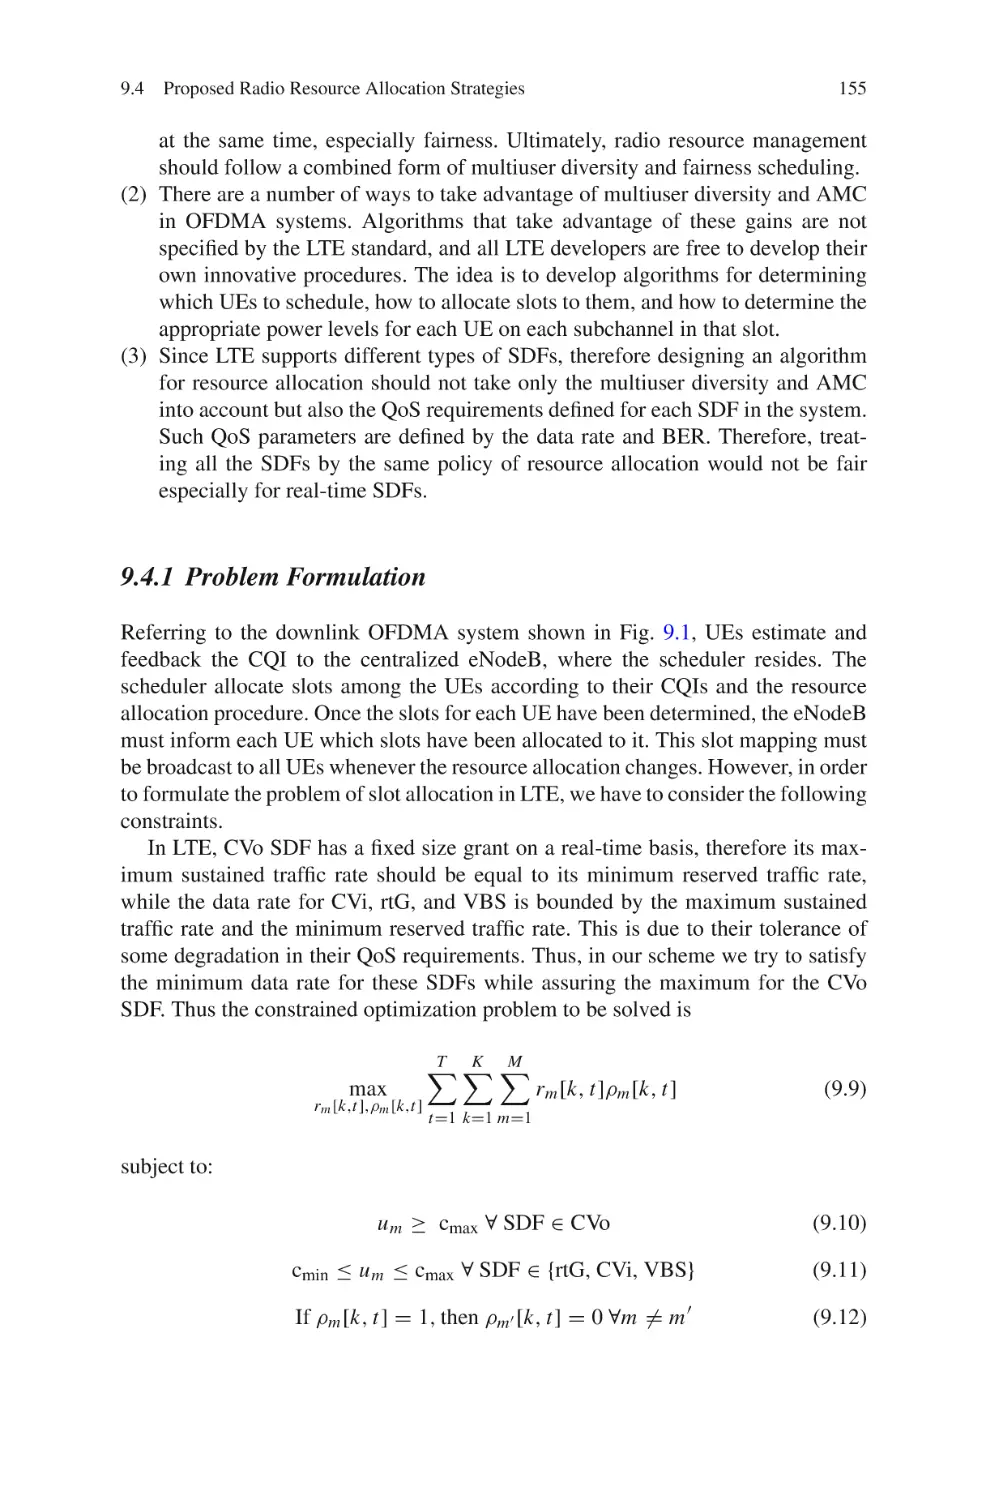 9.4.1  Problem Formulation